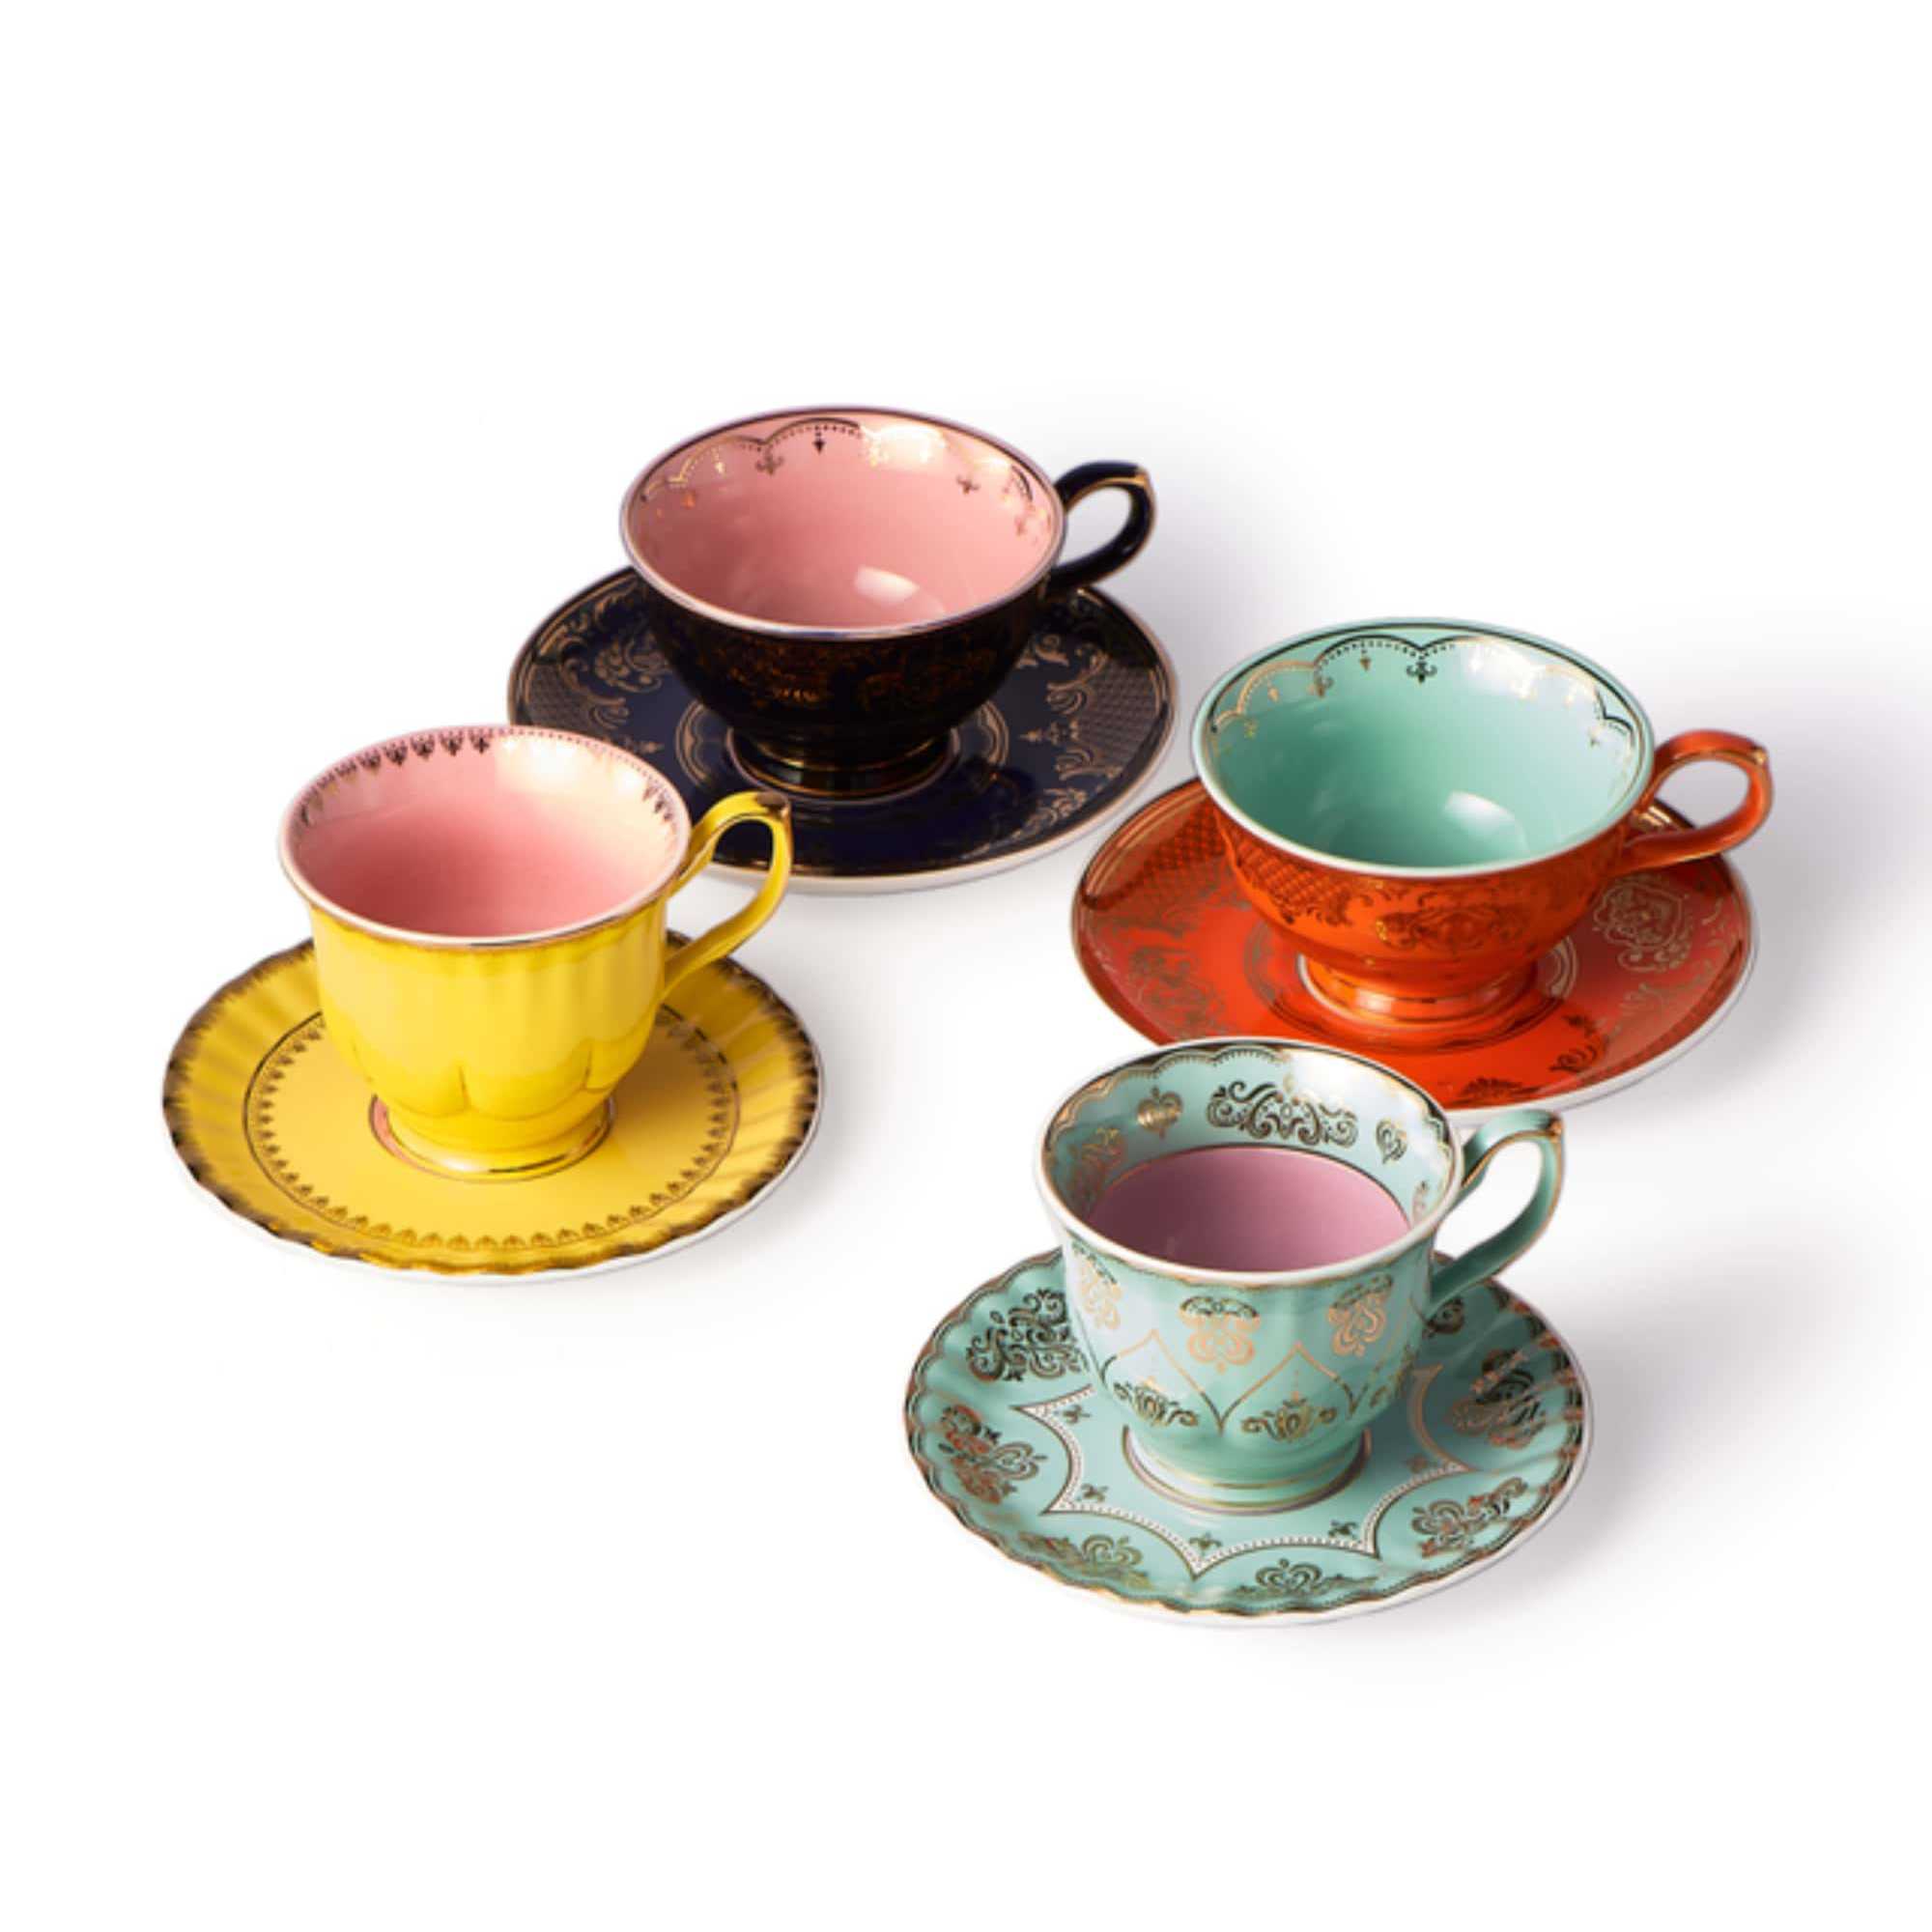 Pols Potton Grandpa Teacups (Set of 4)